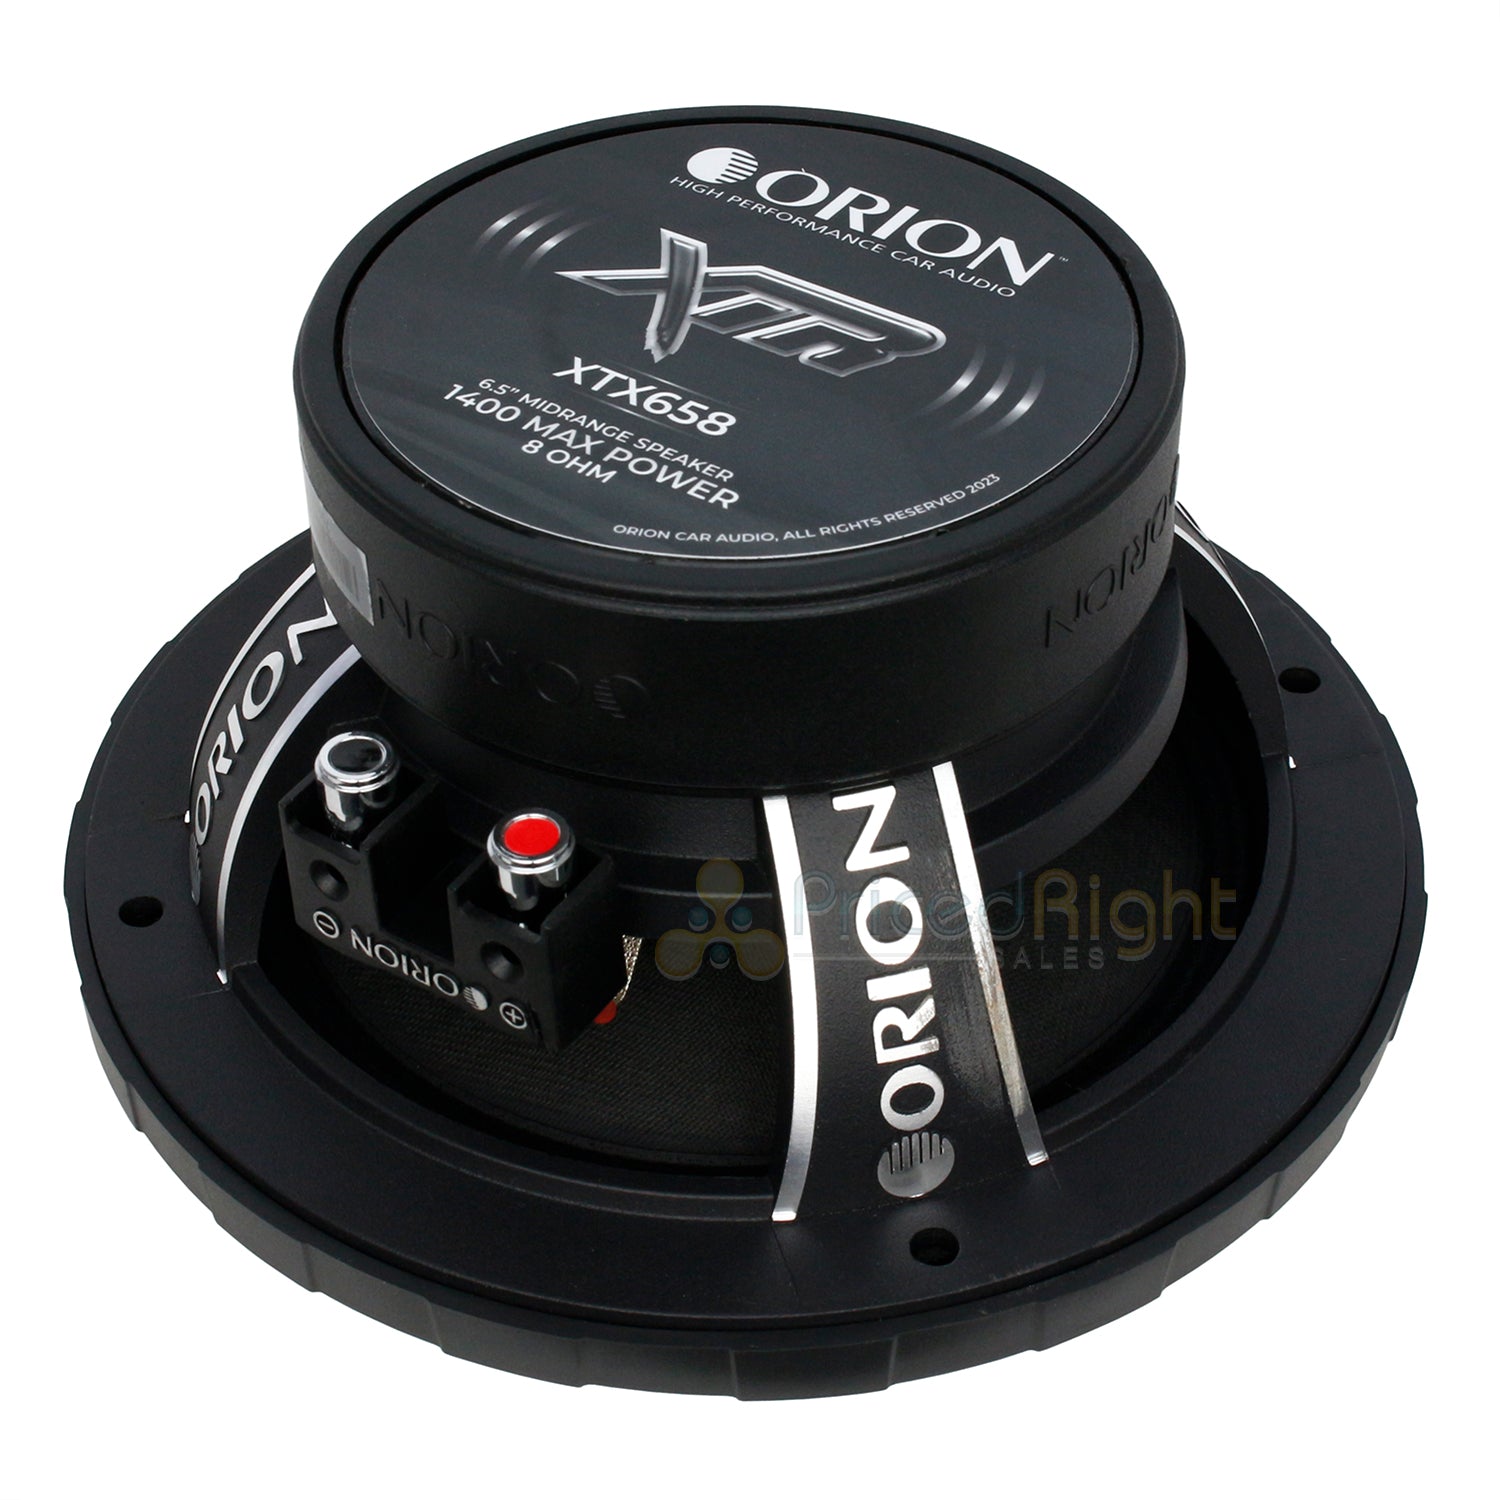 Orion XTX658 6.5" High Performance Midrange Car Speaker Pair 8 Ohm 1400W Max